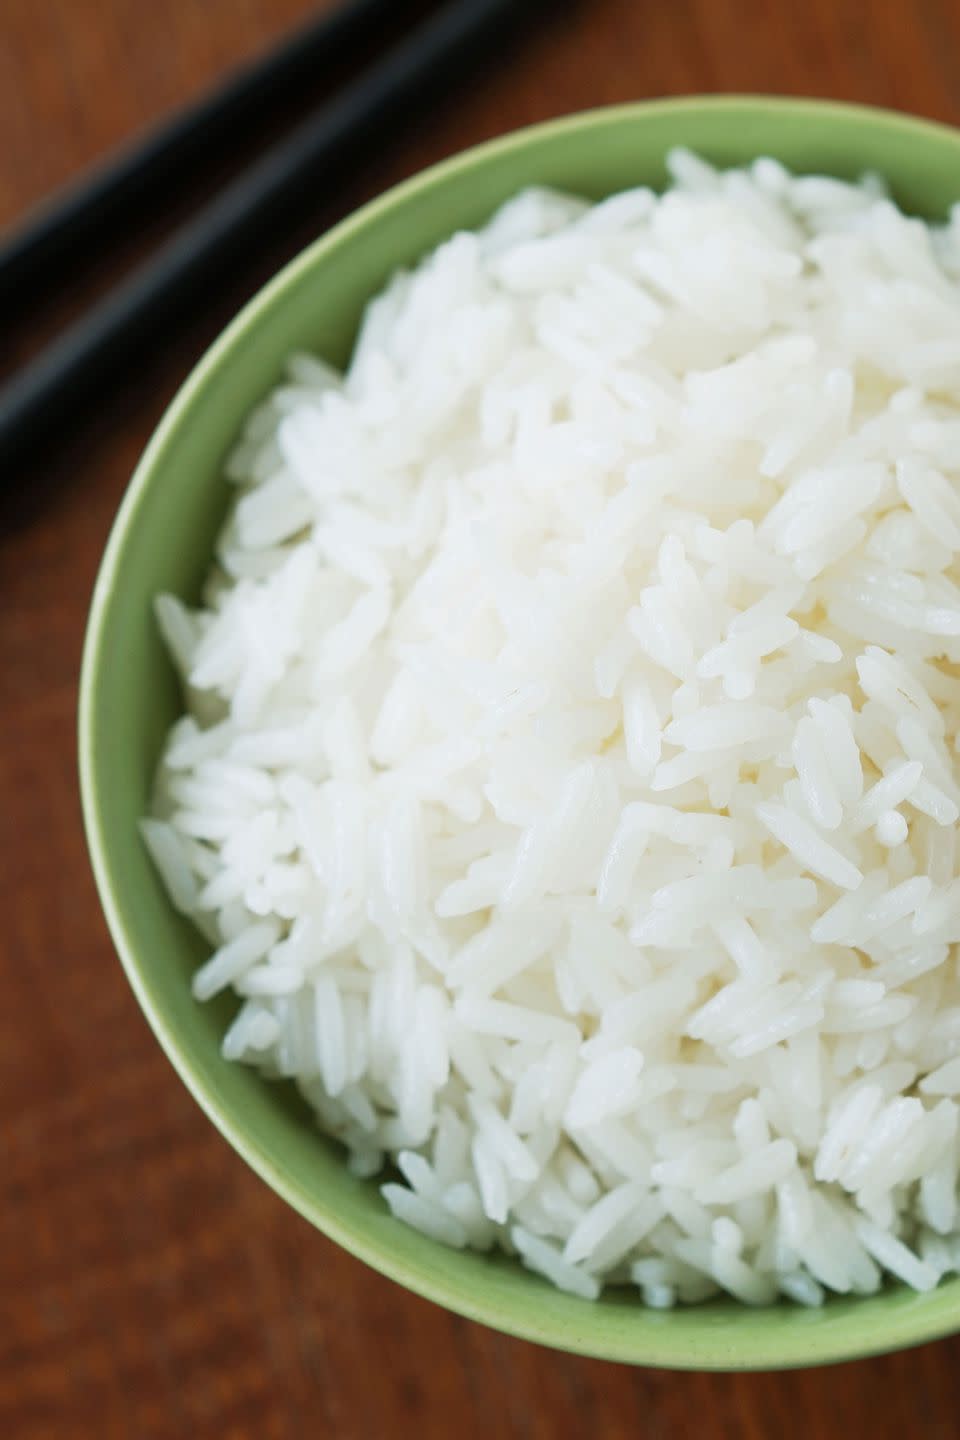 Slash rice calories in half with coconut oil.